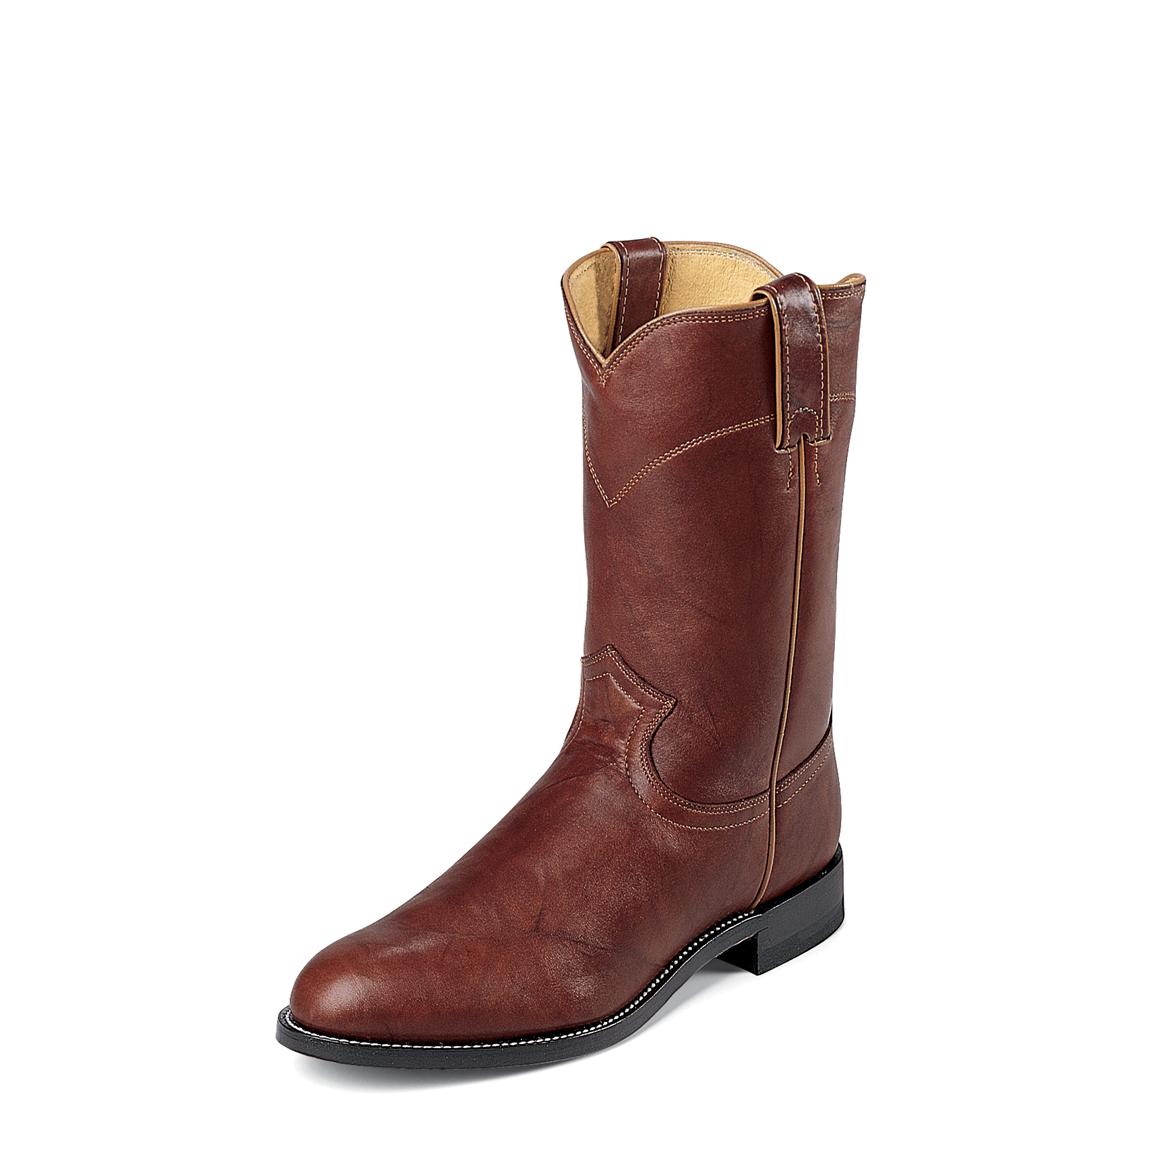 Men's 10" Justin® Marbled Deerlite Classic Ropers - Cowboy Boots